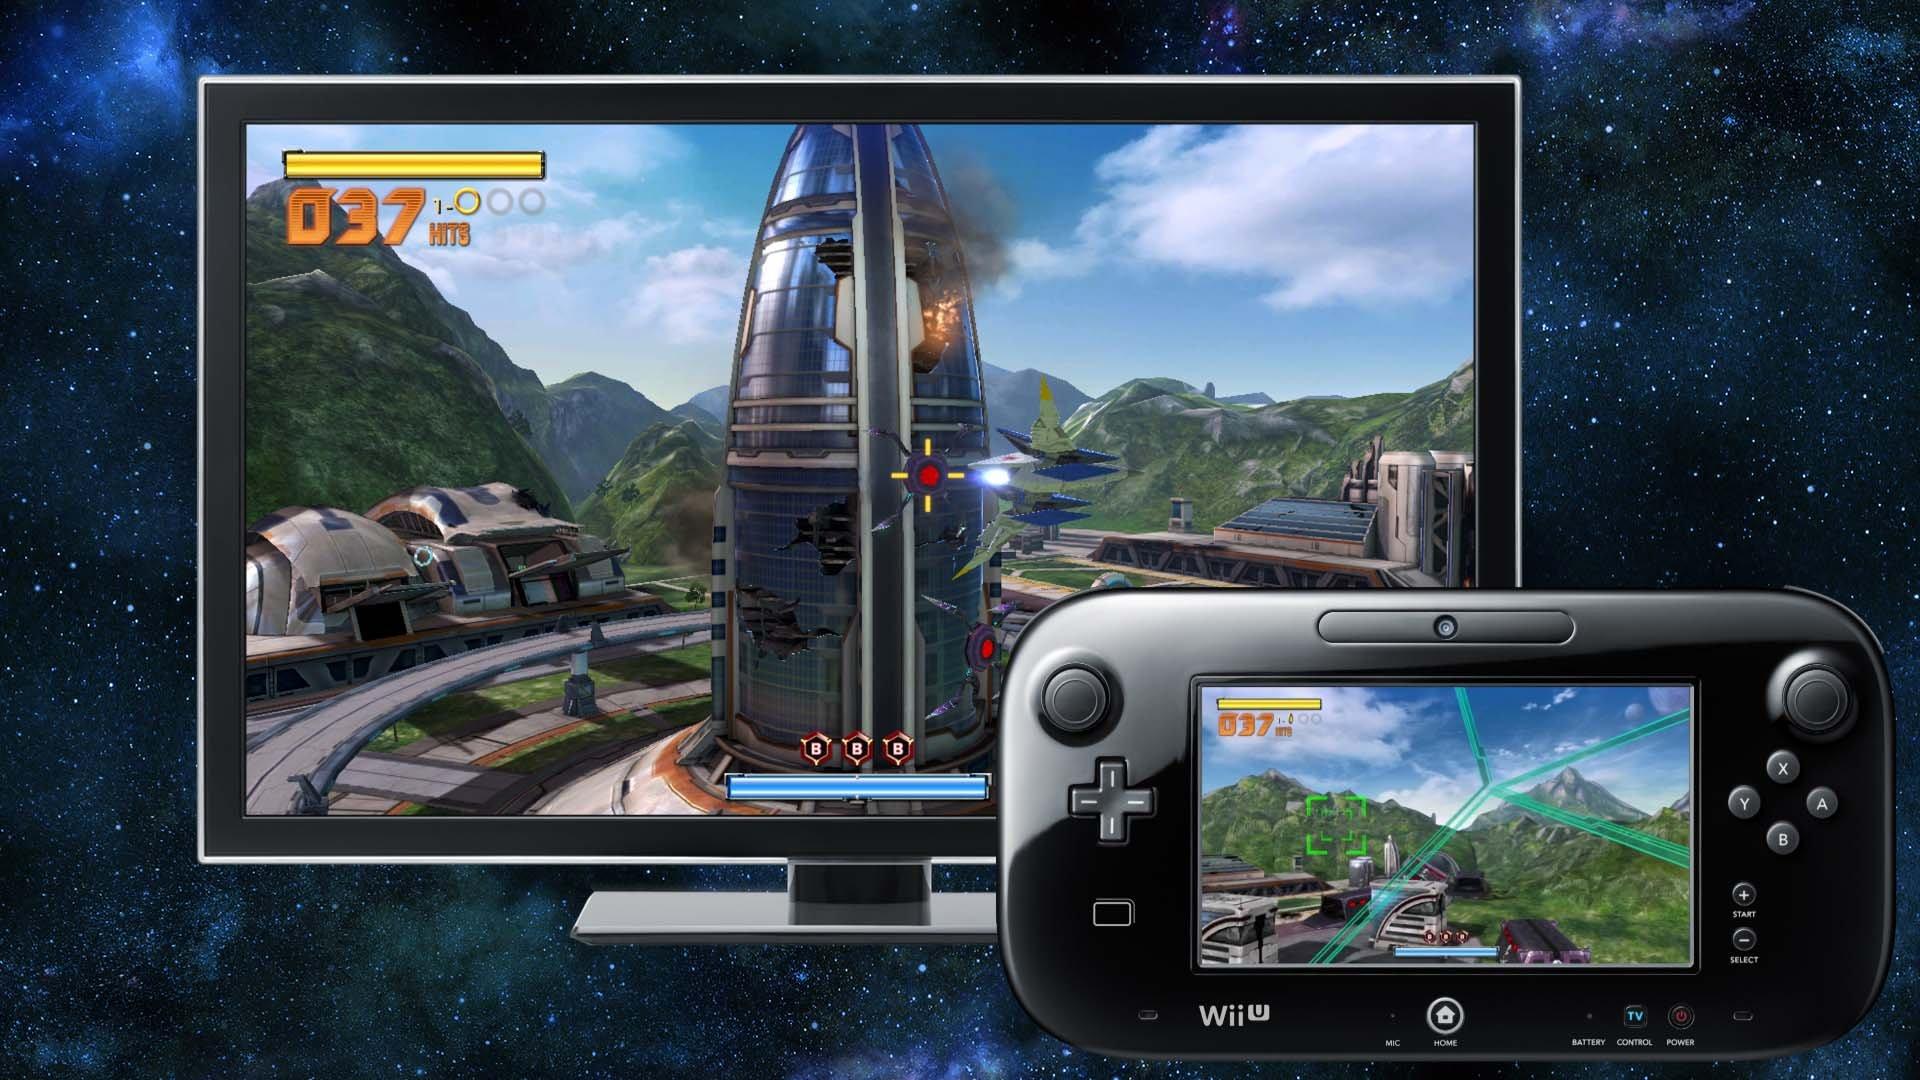 Star Fox Zero Wii U Release Date is April 22